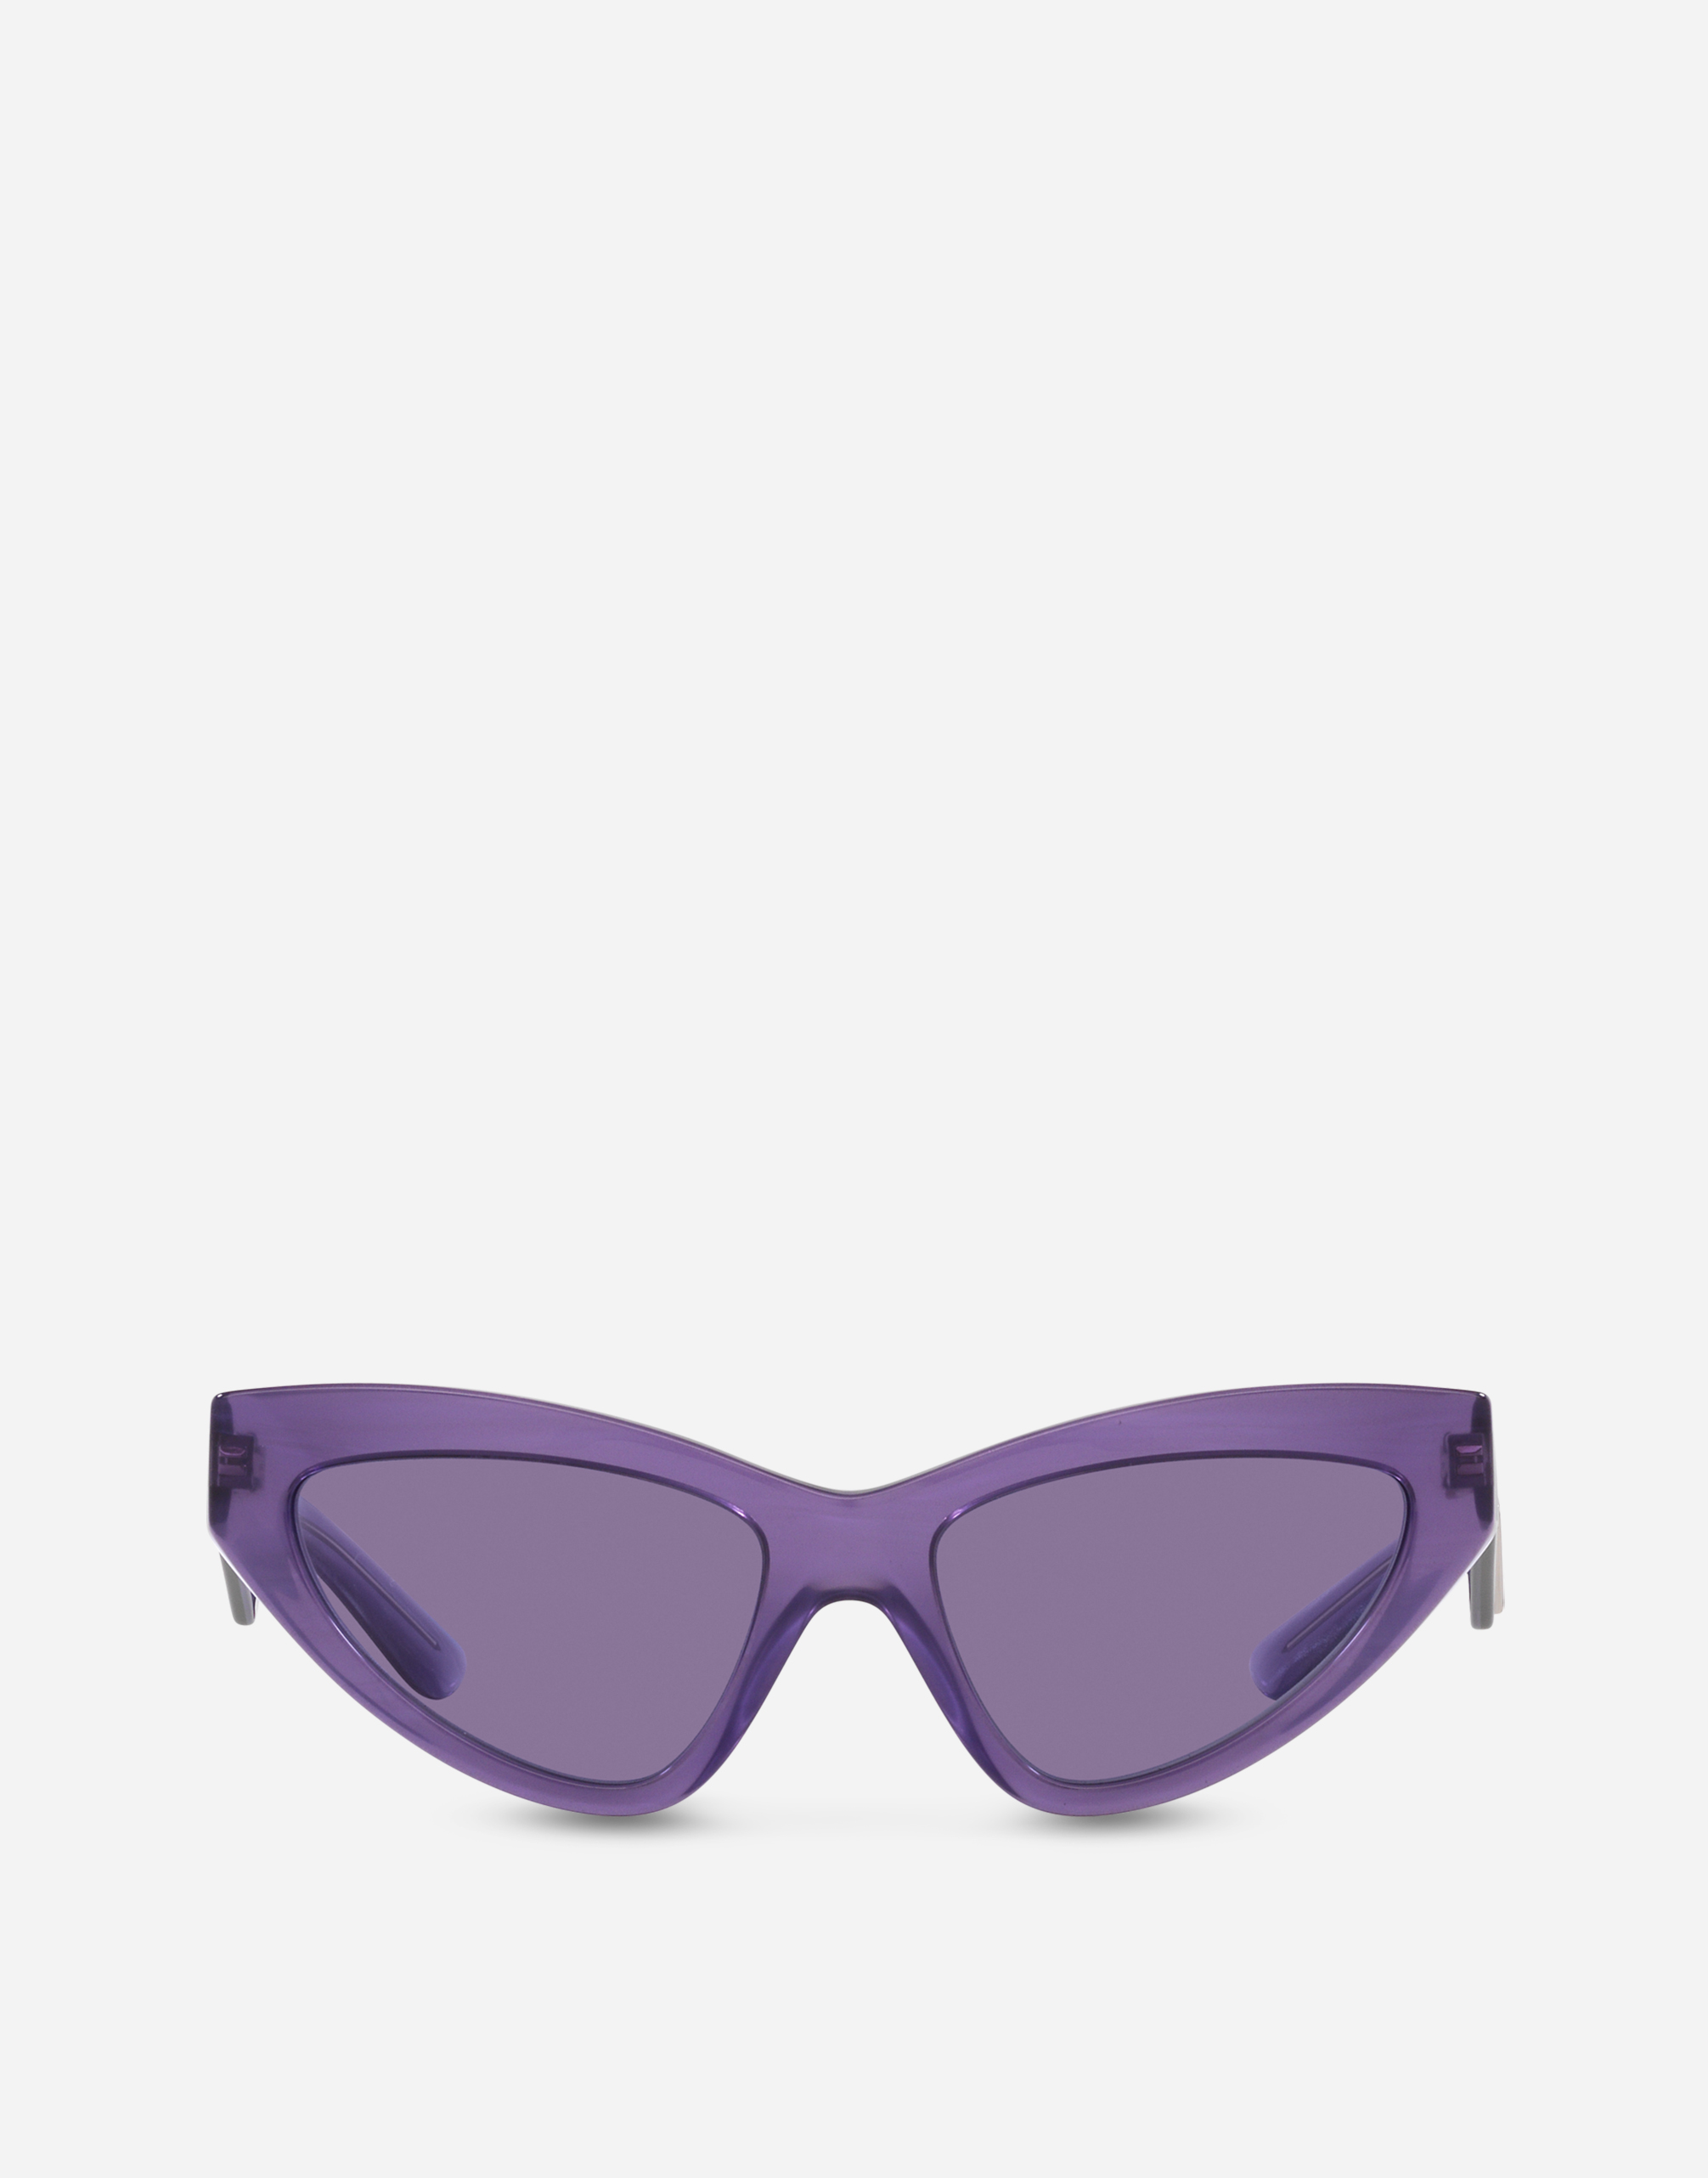 Dolce & Gabbana Dg Crossed Sunglasses In Fleur Purple